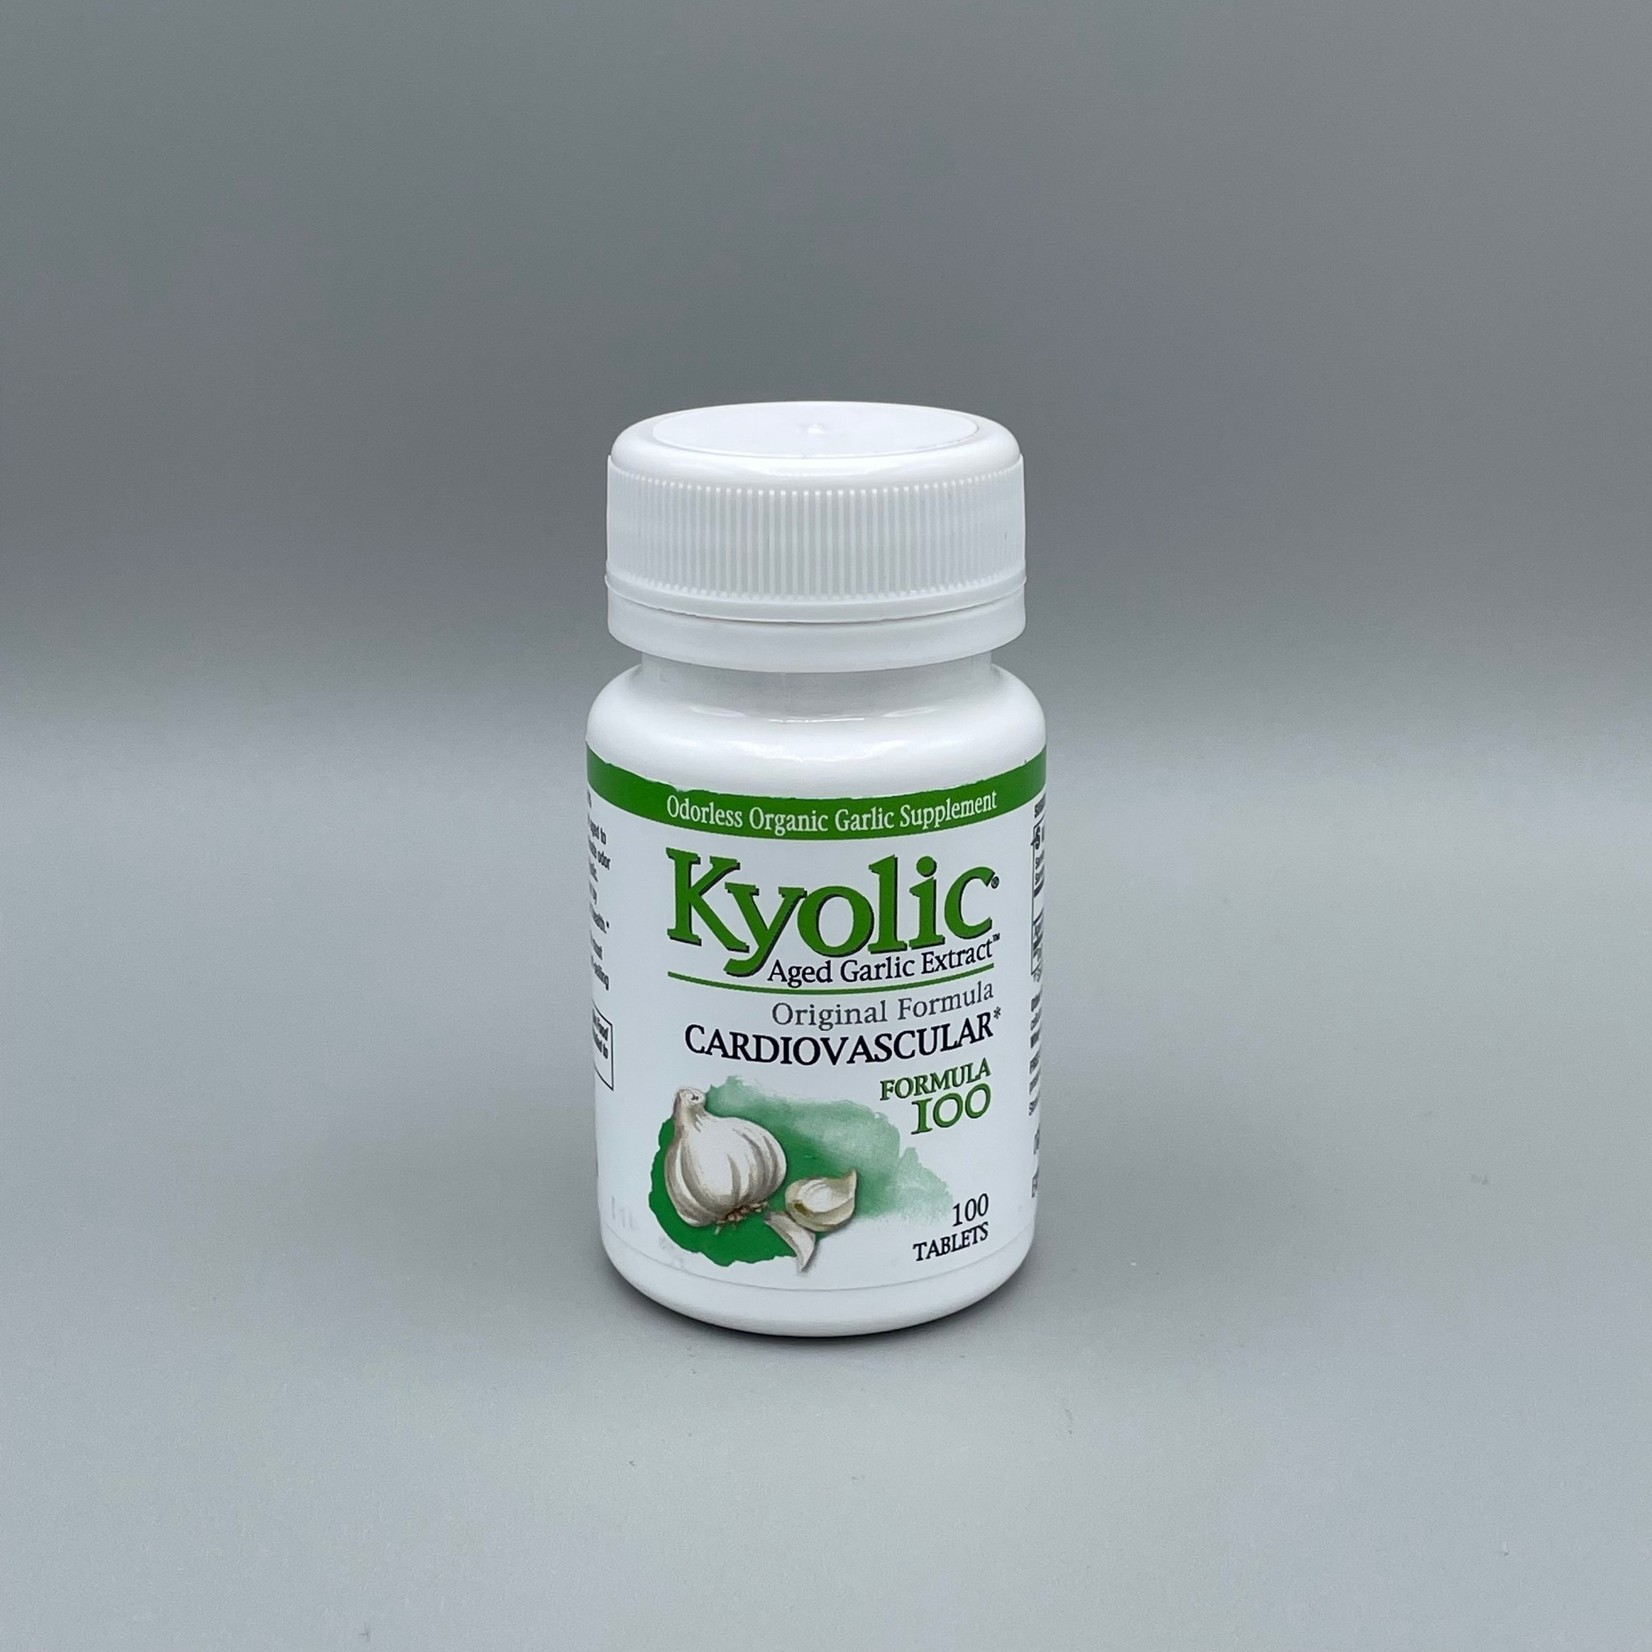 Kyolic Kyolic Formula 100: Cardiovascular (Original), 100 Tablets